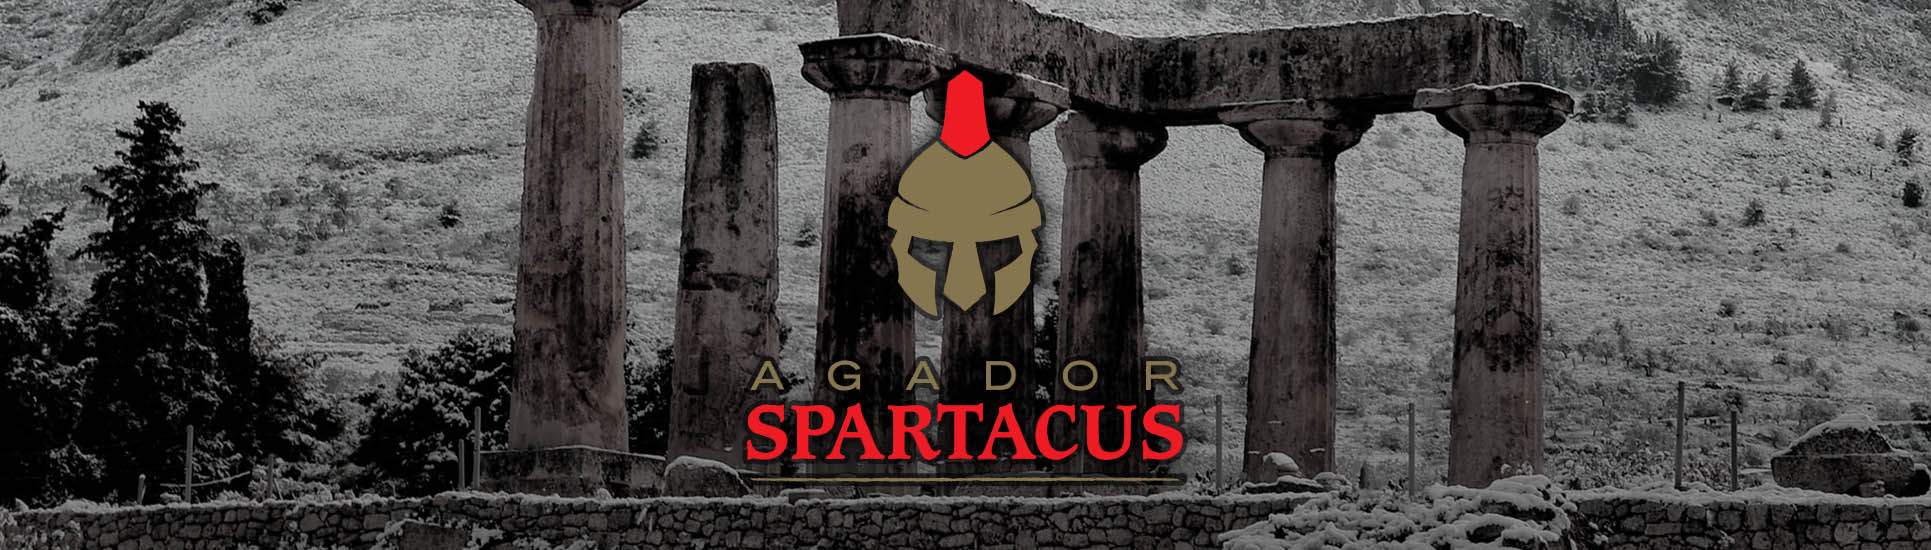 agador spartacus